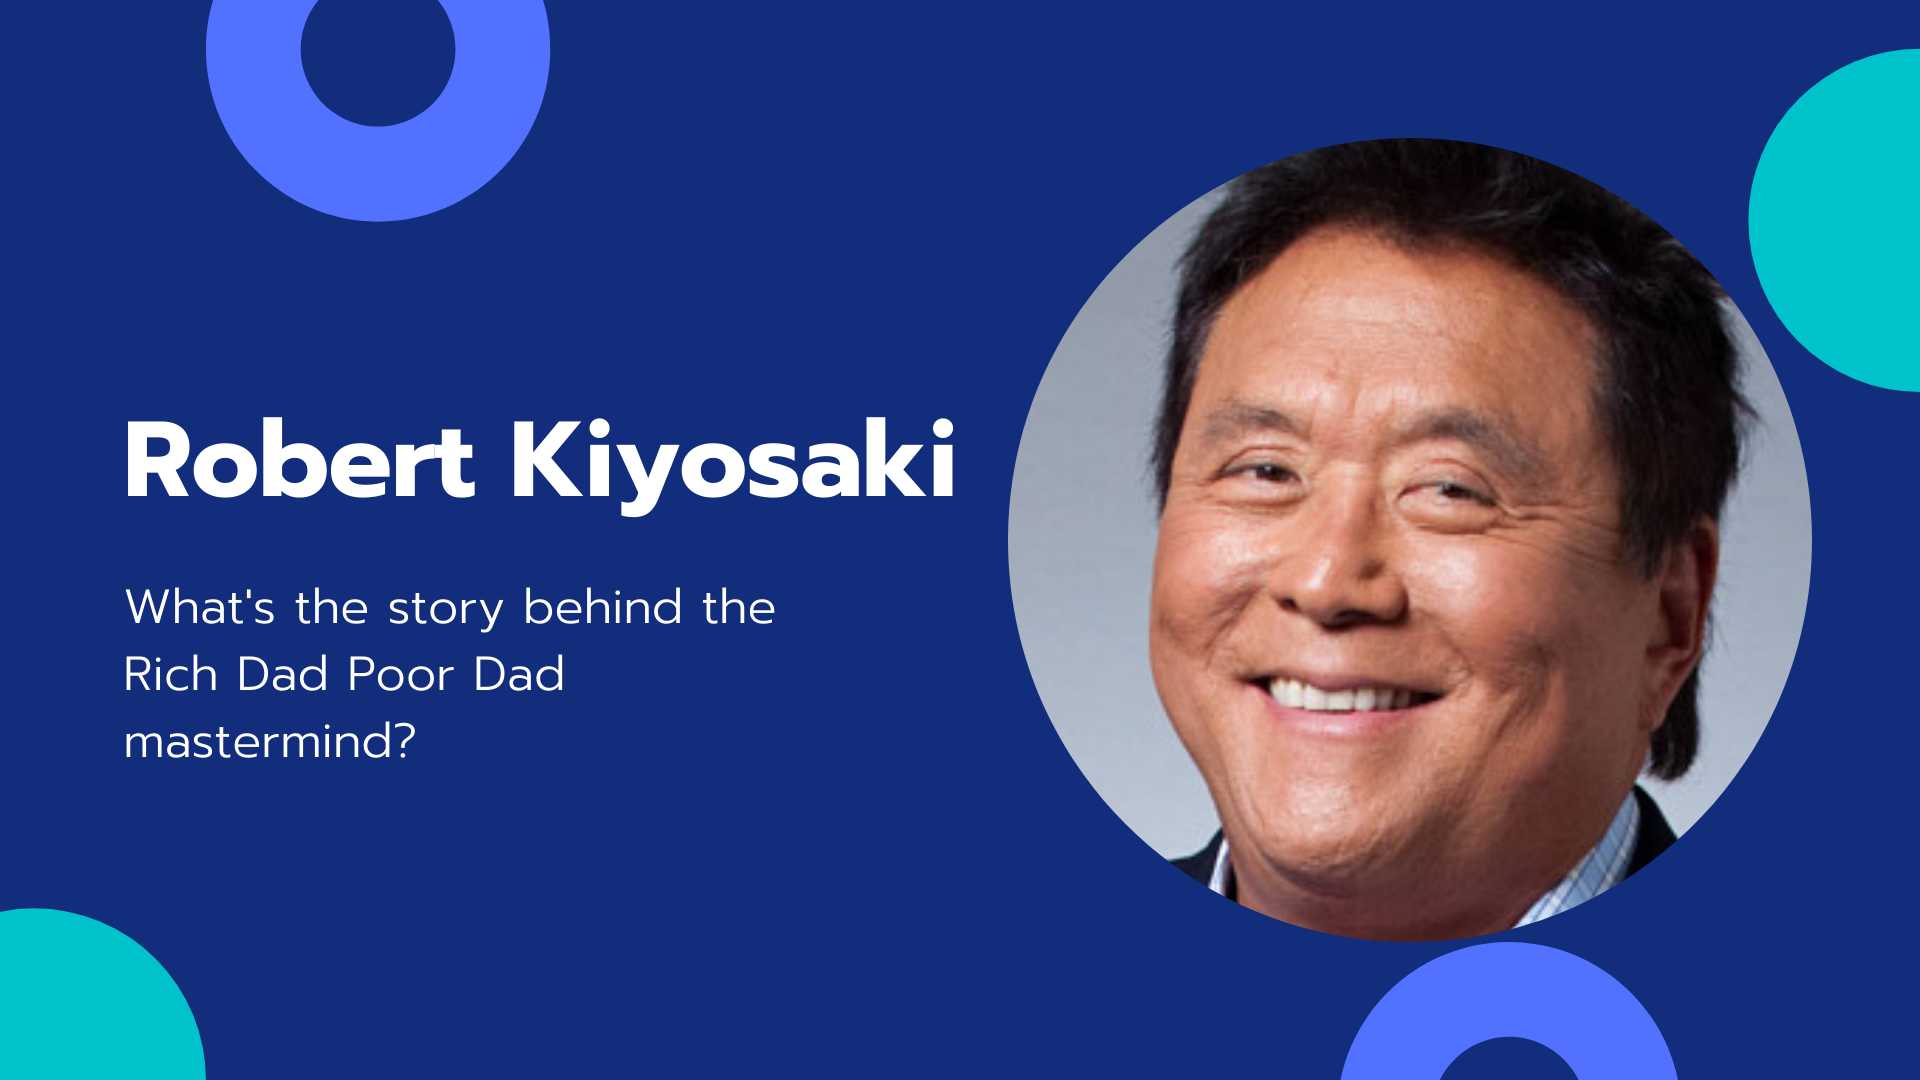 Robert Kiyosaki Net Worth: The Story Behind The Rich Dad Poor Dad